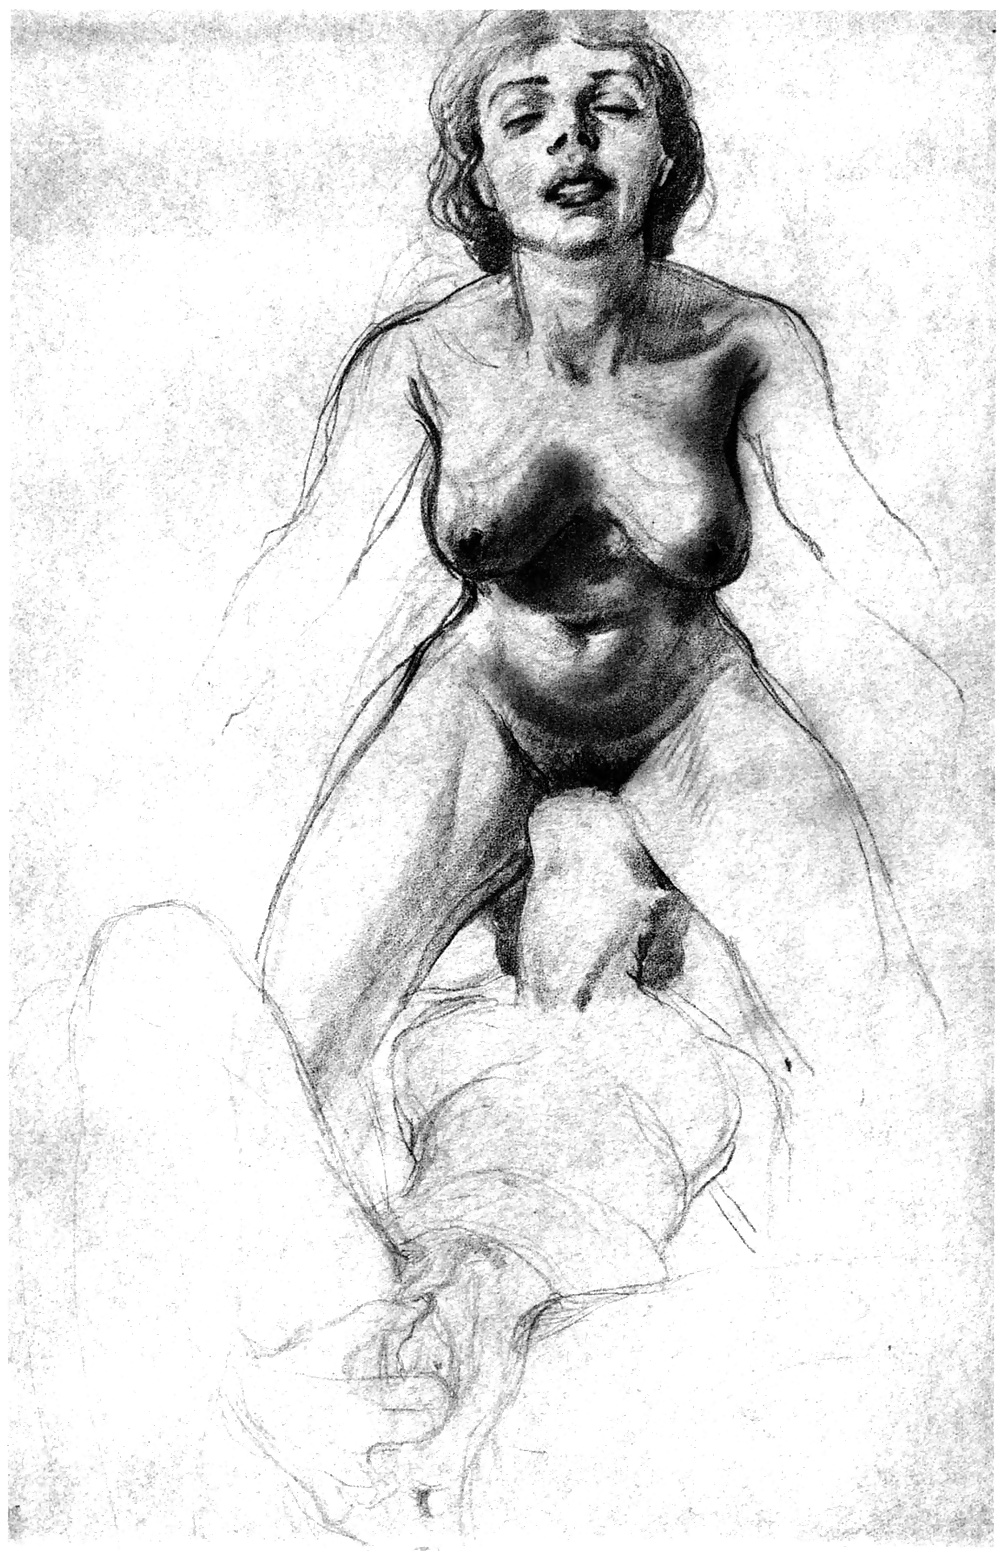 Erotic Art -  Drawings - Skizzen - Sketches - Paintings #34196100